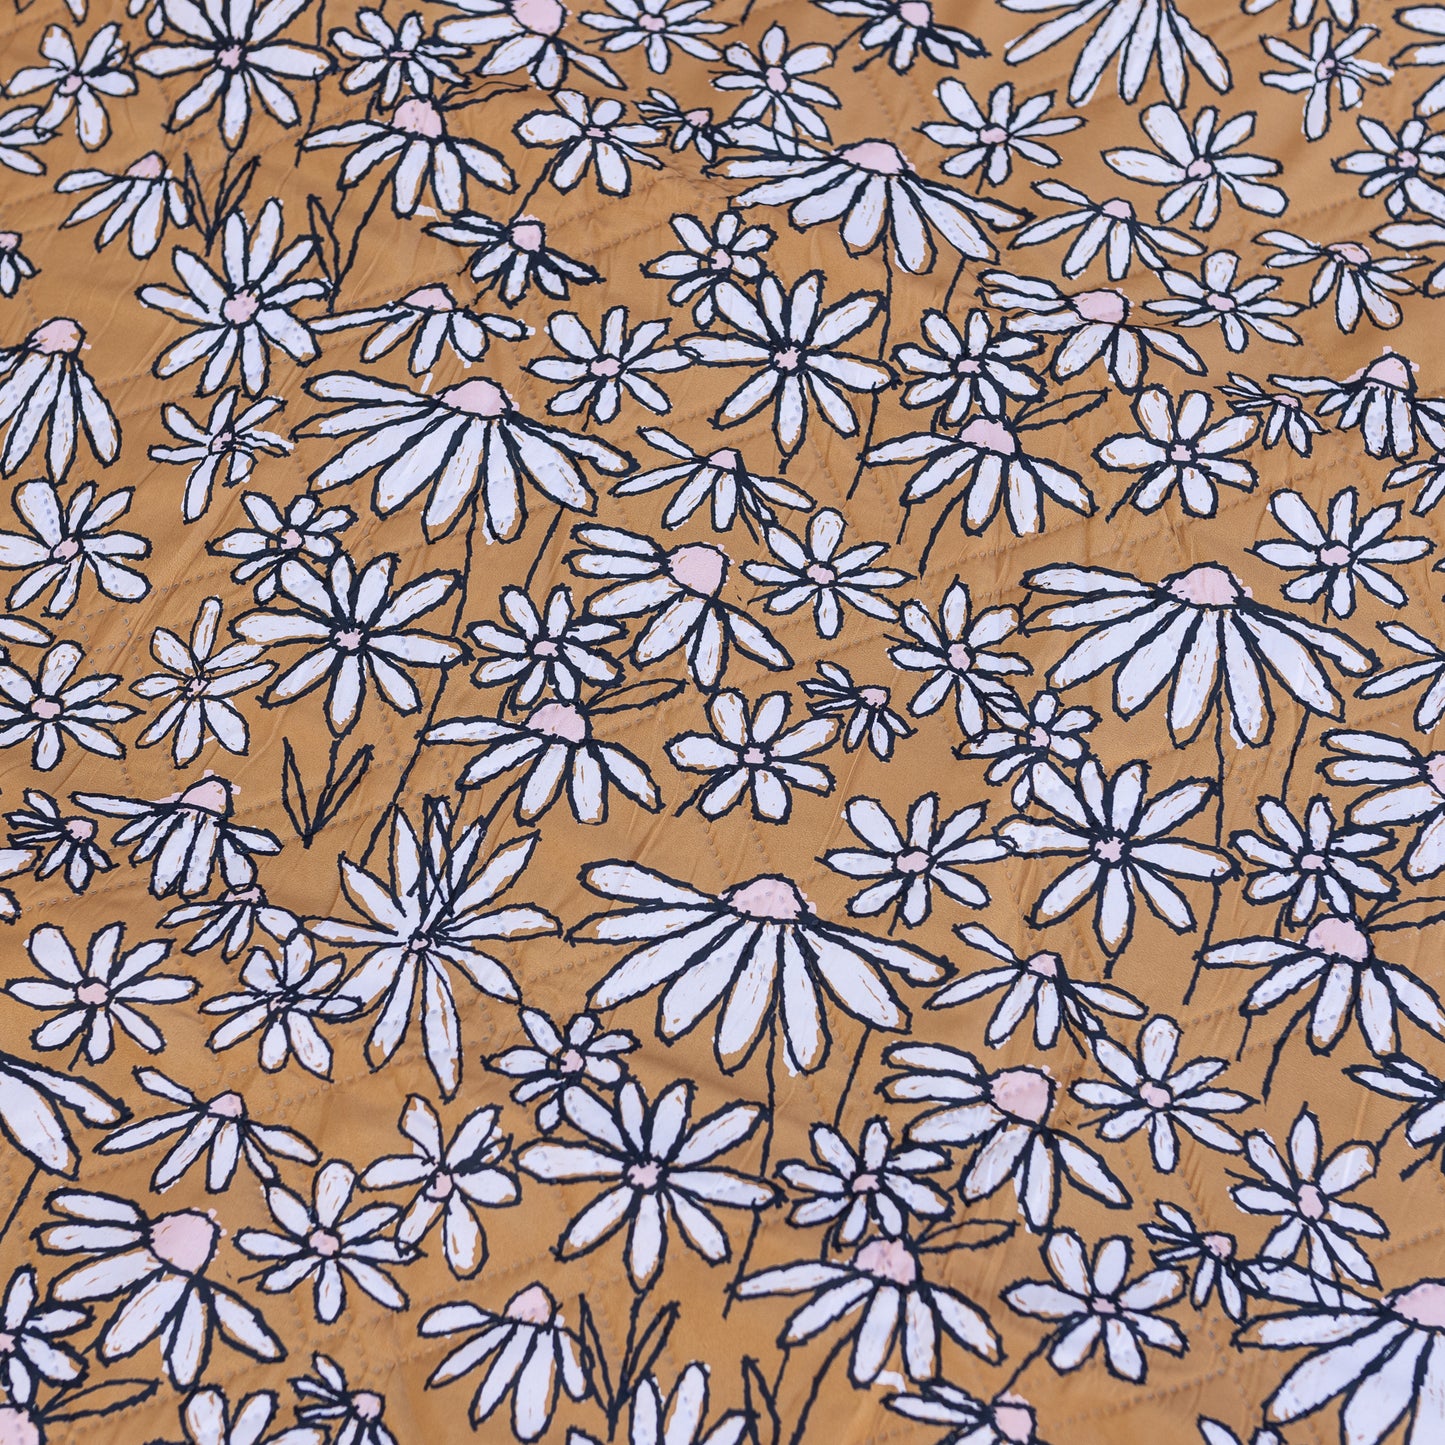 Outdoor Blanket || Field of Daisies